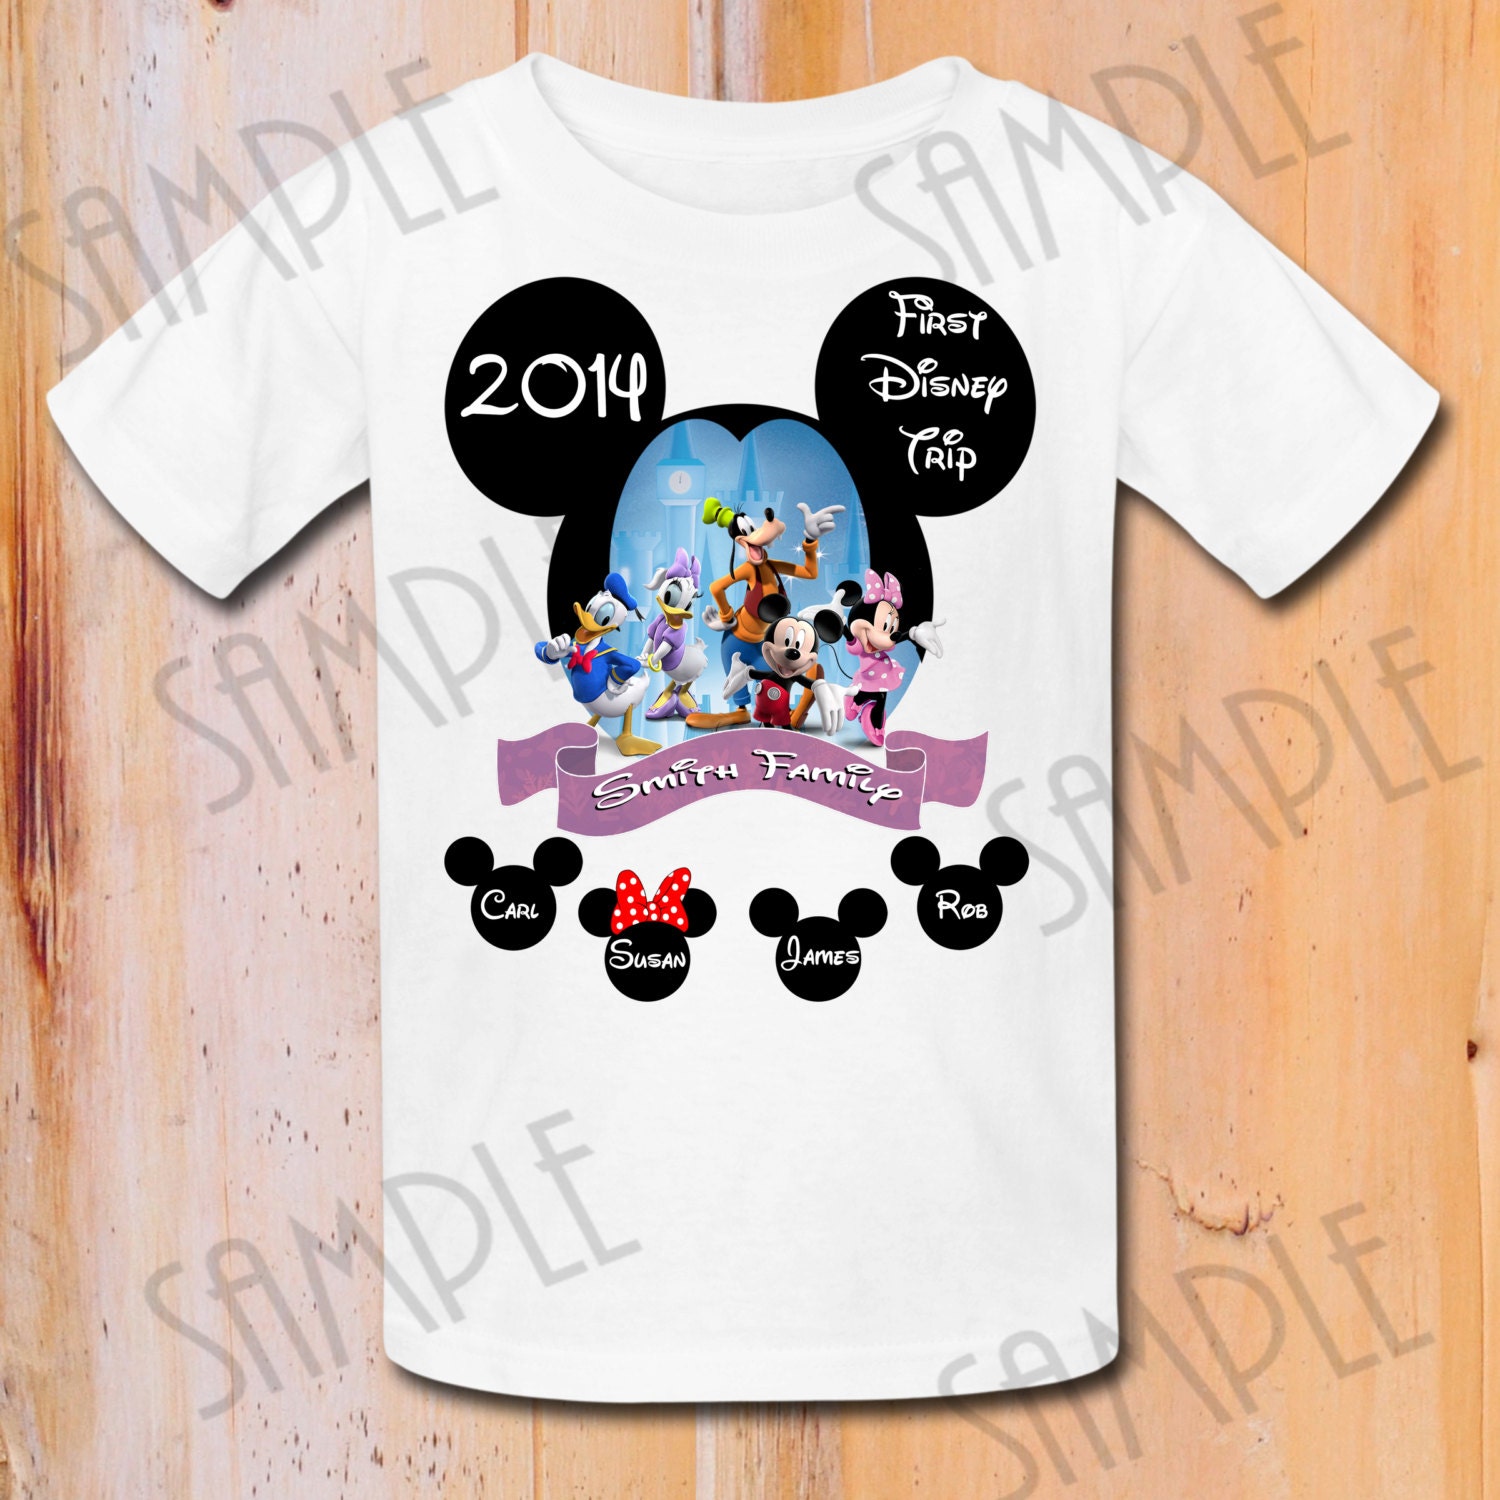 Disney Family Vacation t shirts Iron On Transfer Printable